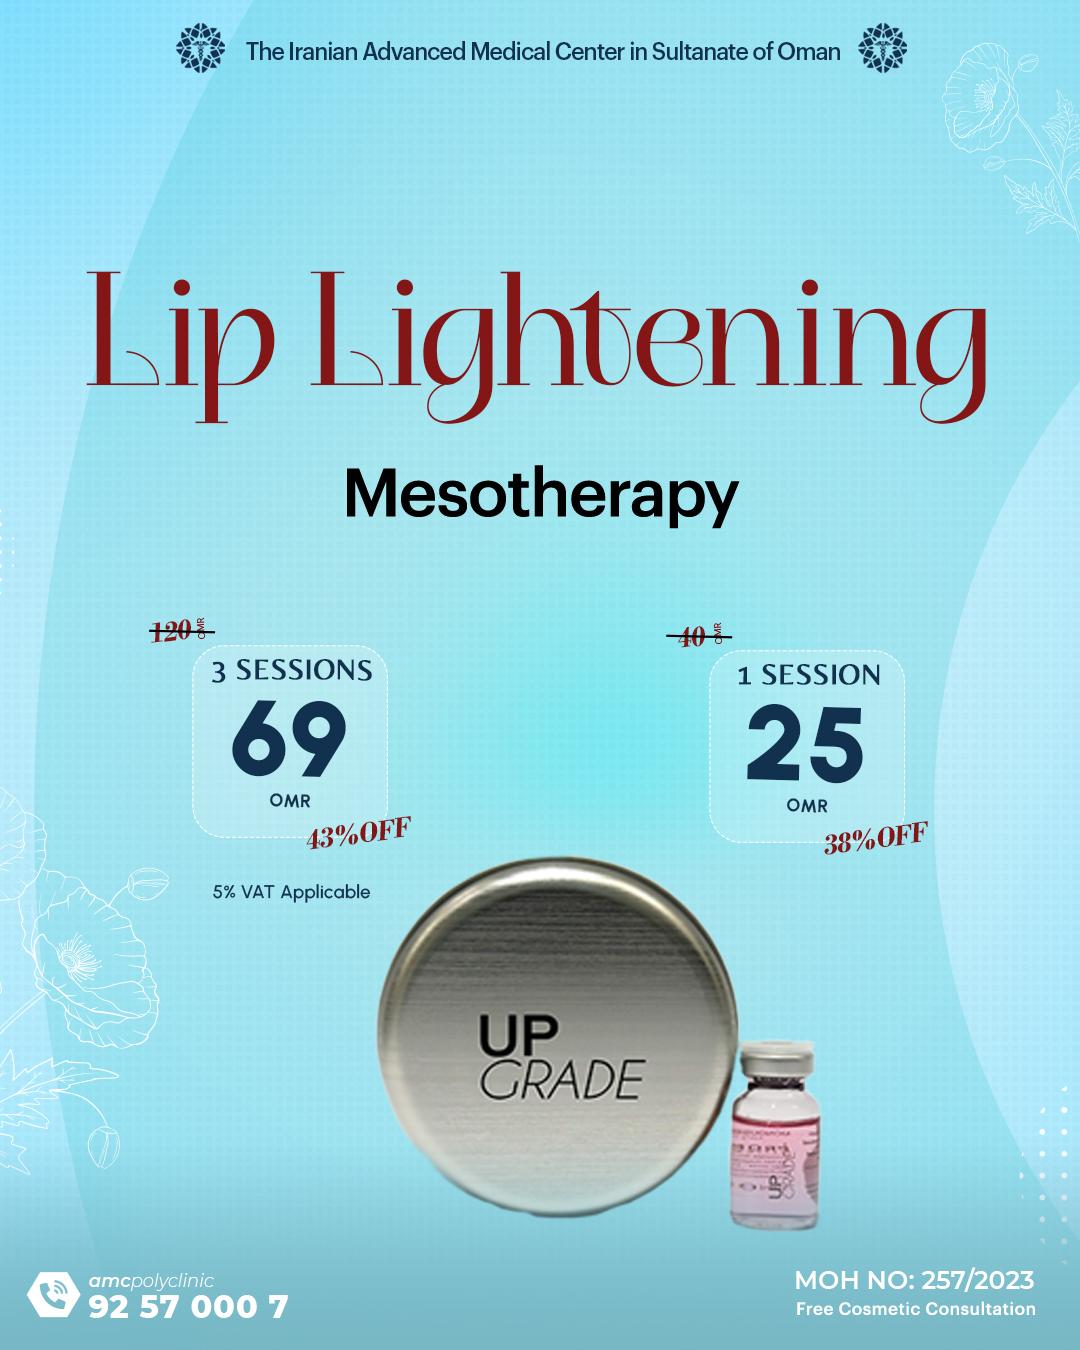 Lip Lightening Mesotherapy